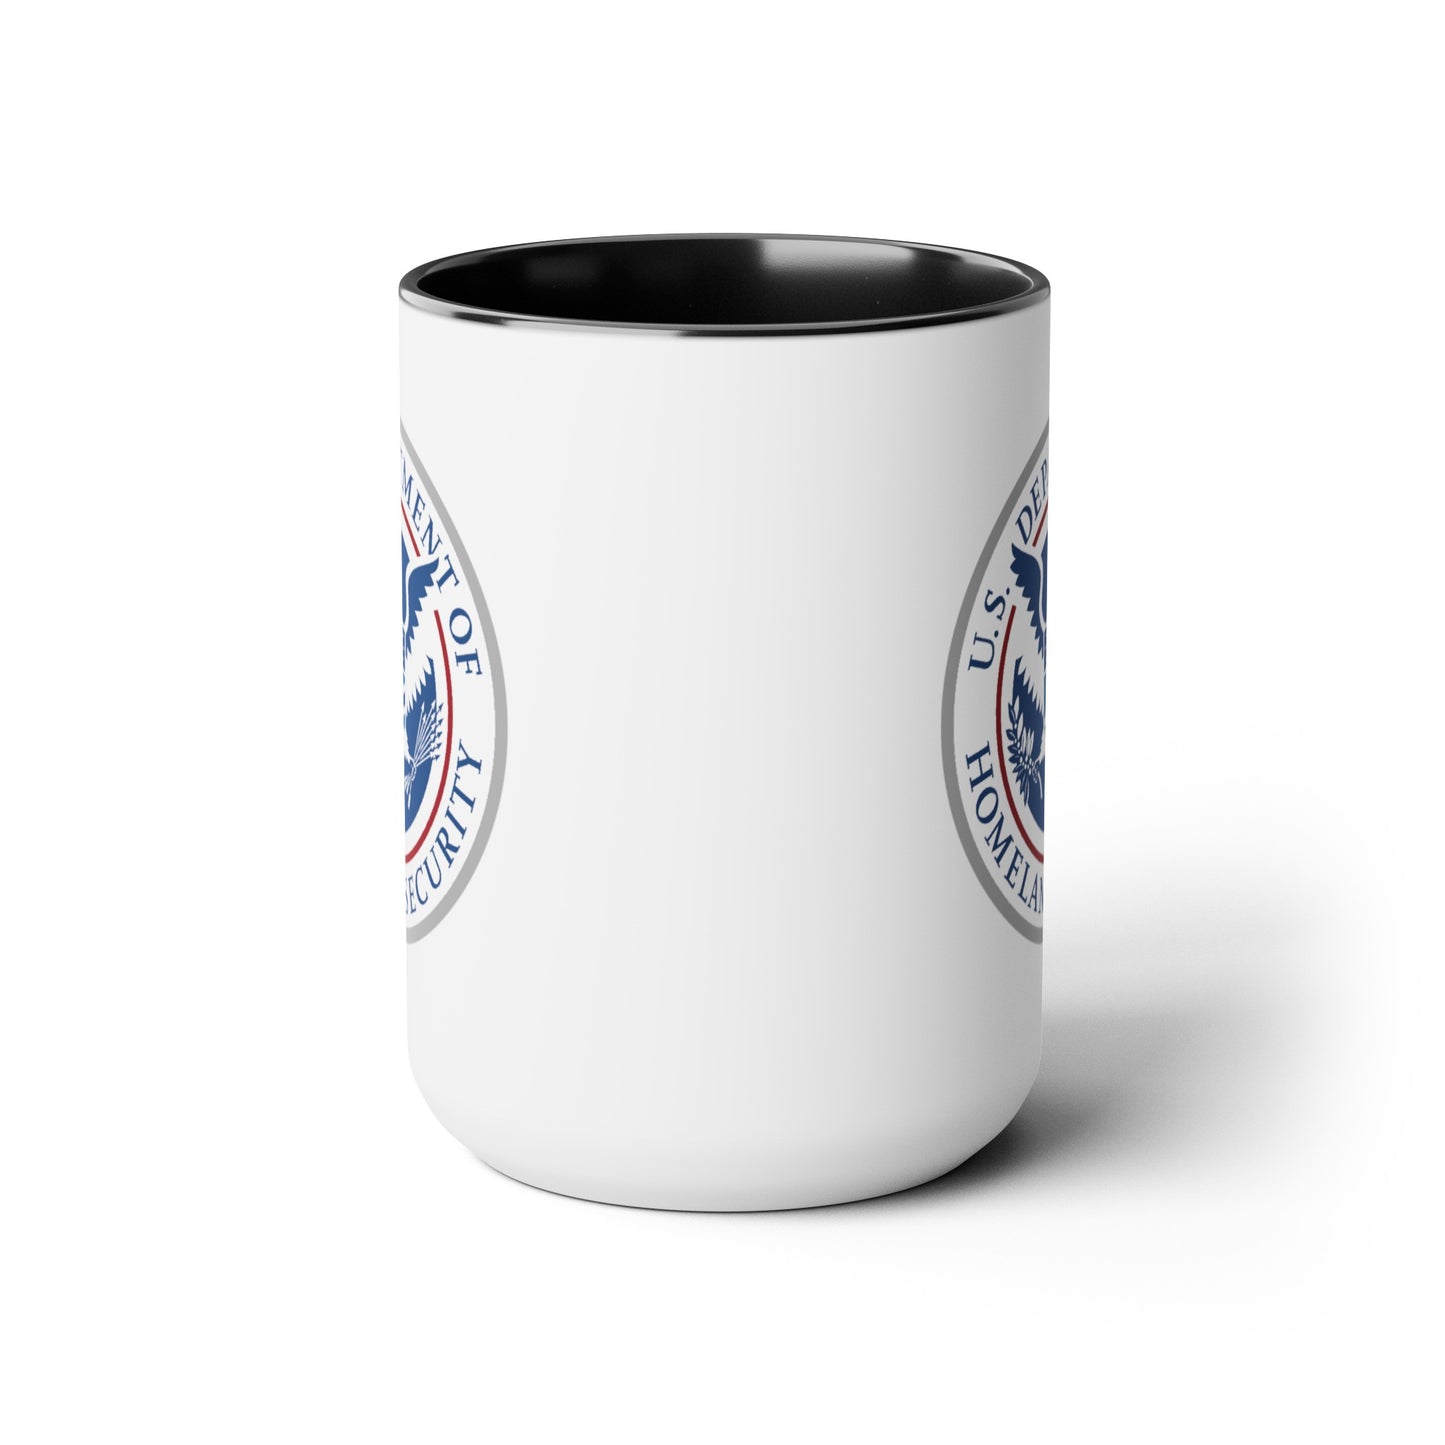 Homeland Security Coffee Mug - Double Sided Black Accent White Ceramic 15oz by TheGlassyLass.com